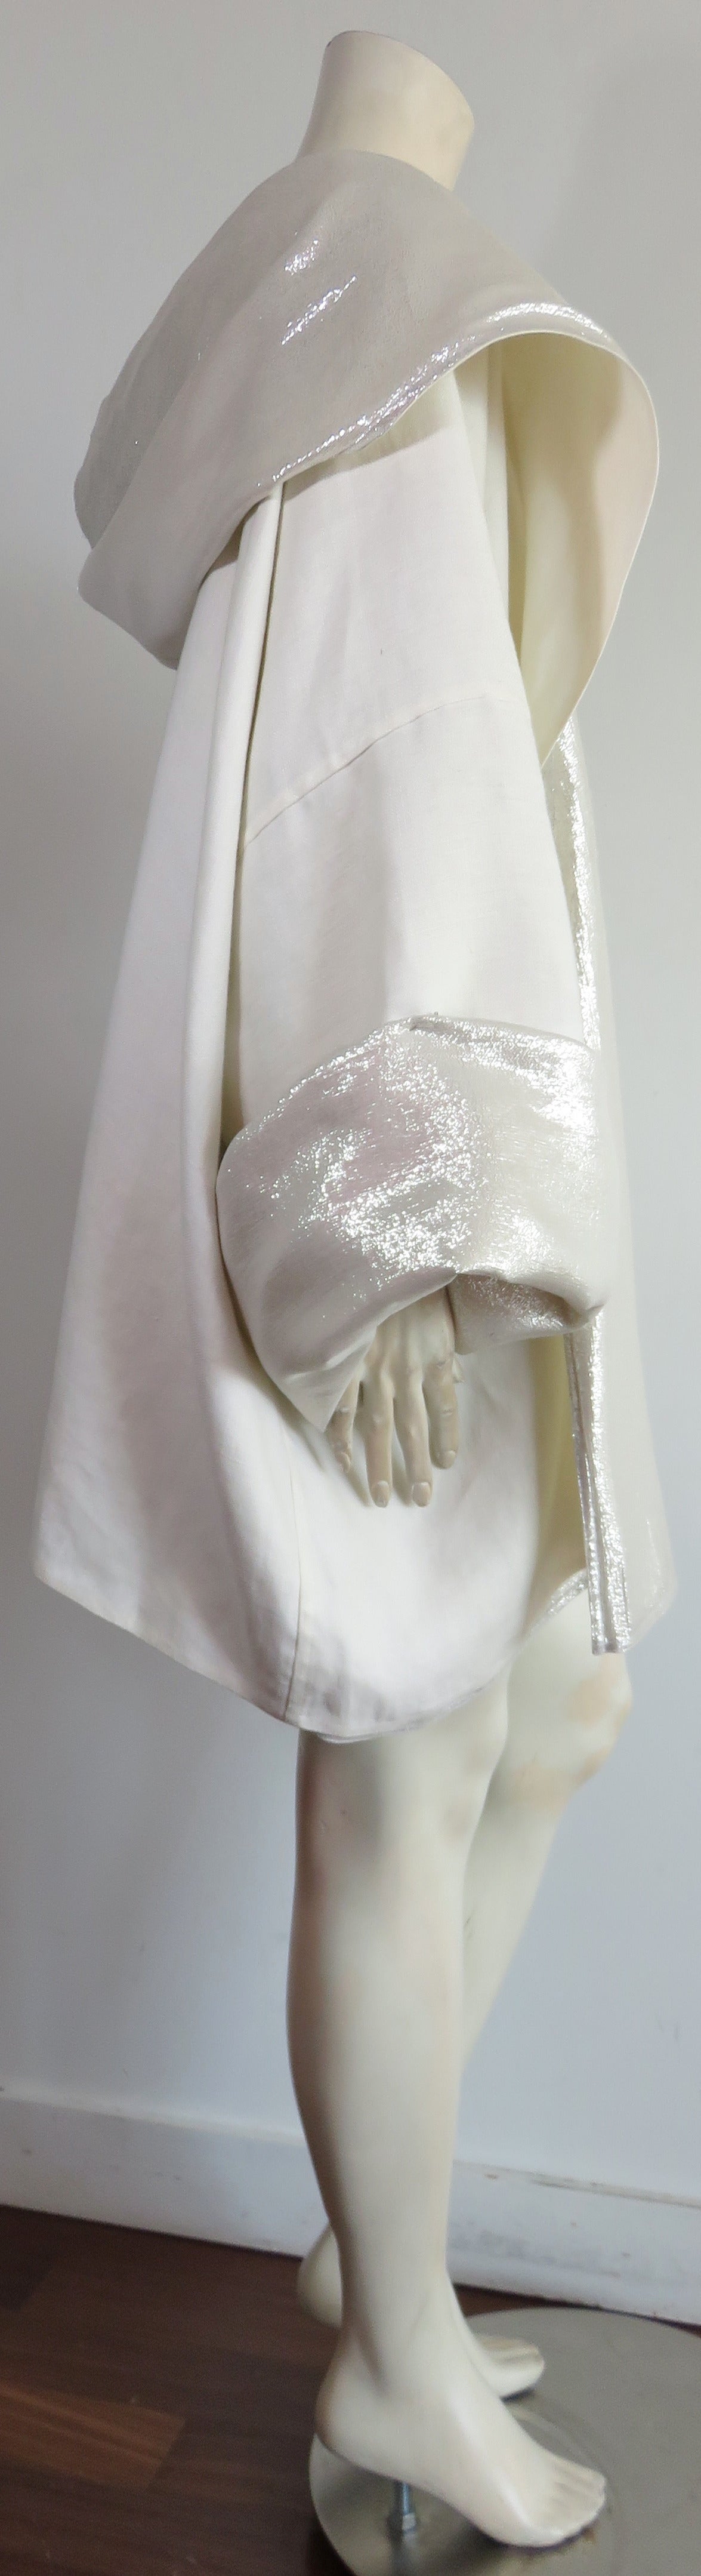 1980's ZORAN White/Silver hooded reversible jacket 2